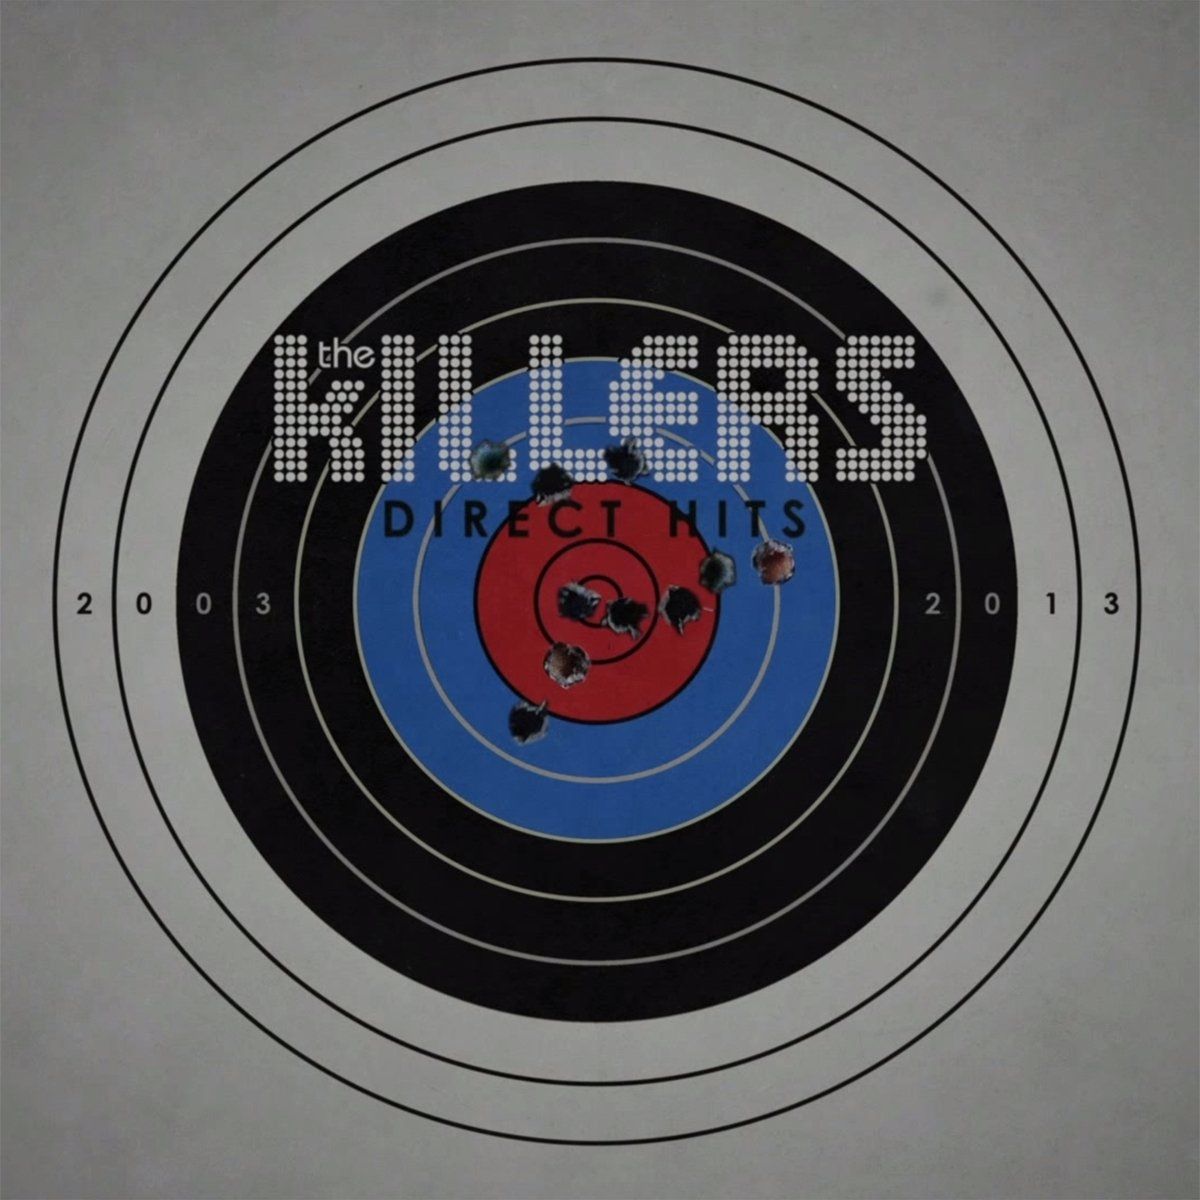 Imagem do álbum Direct Hits 2003-2013 do(a) artista The Killers